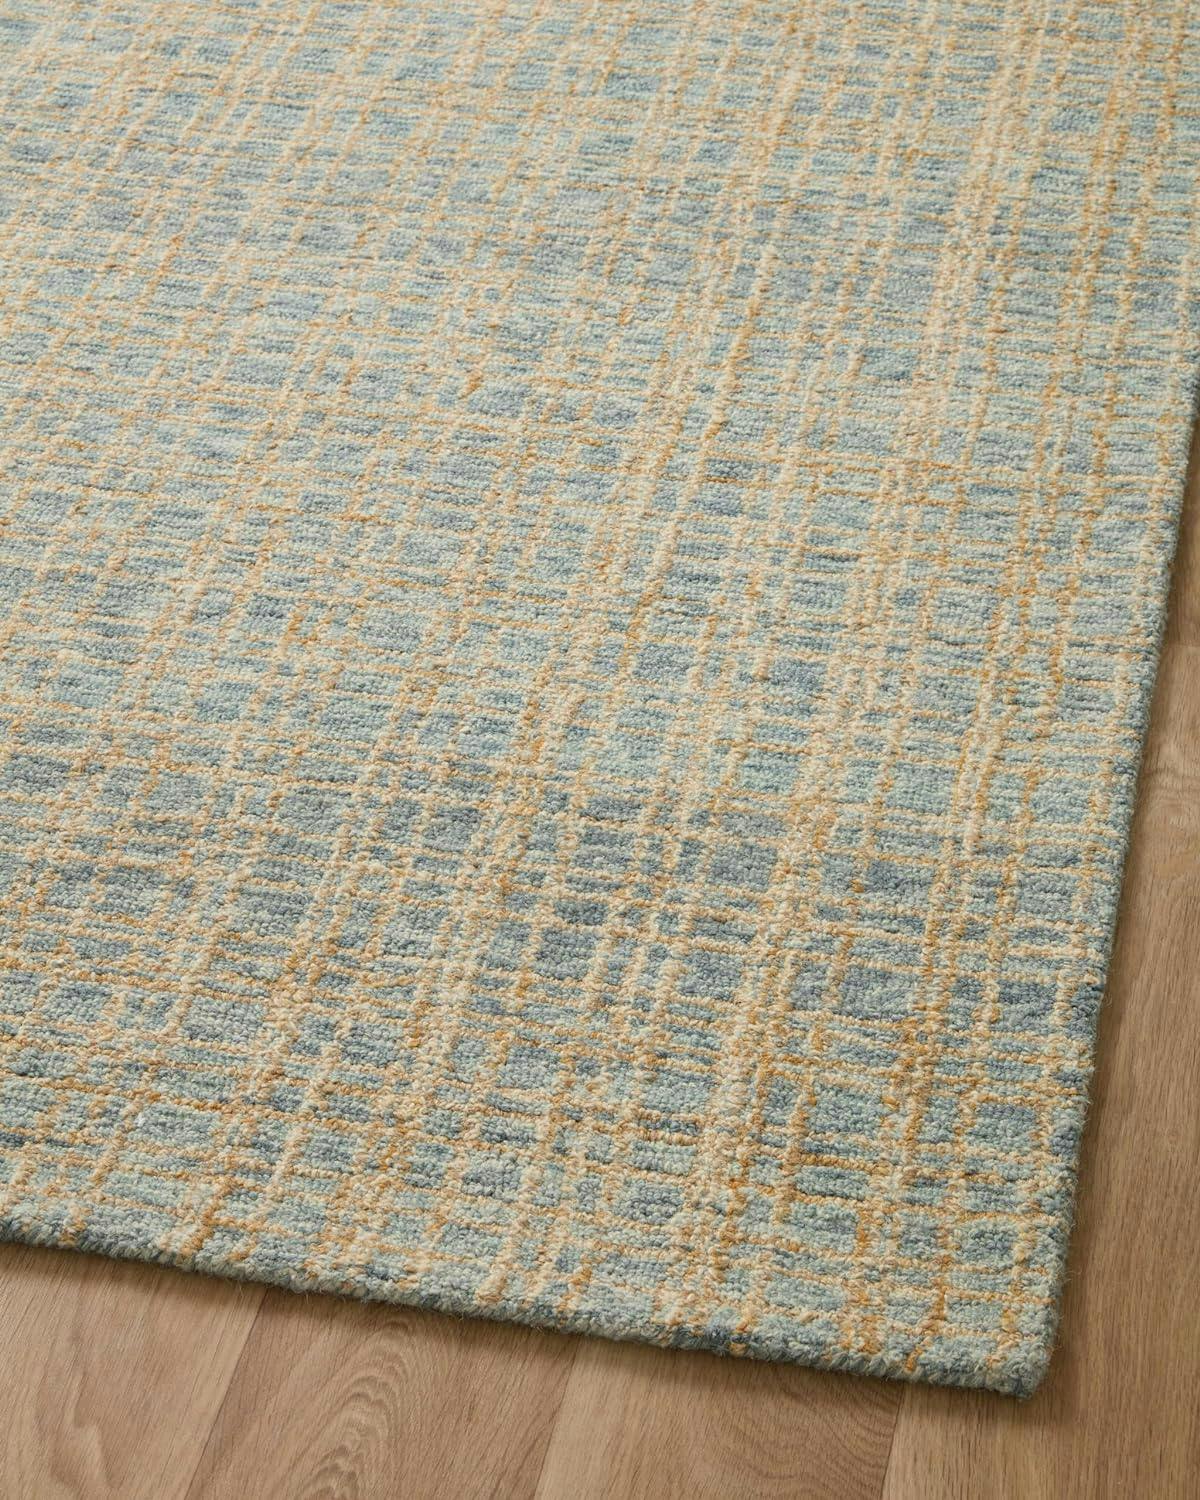 Handmade Tufted Blue/Sand Wool Rectangular Area Rug